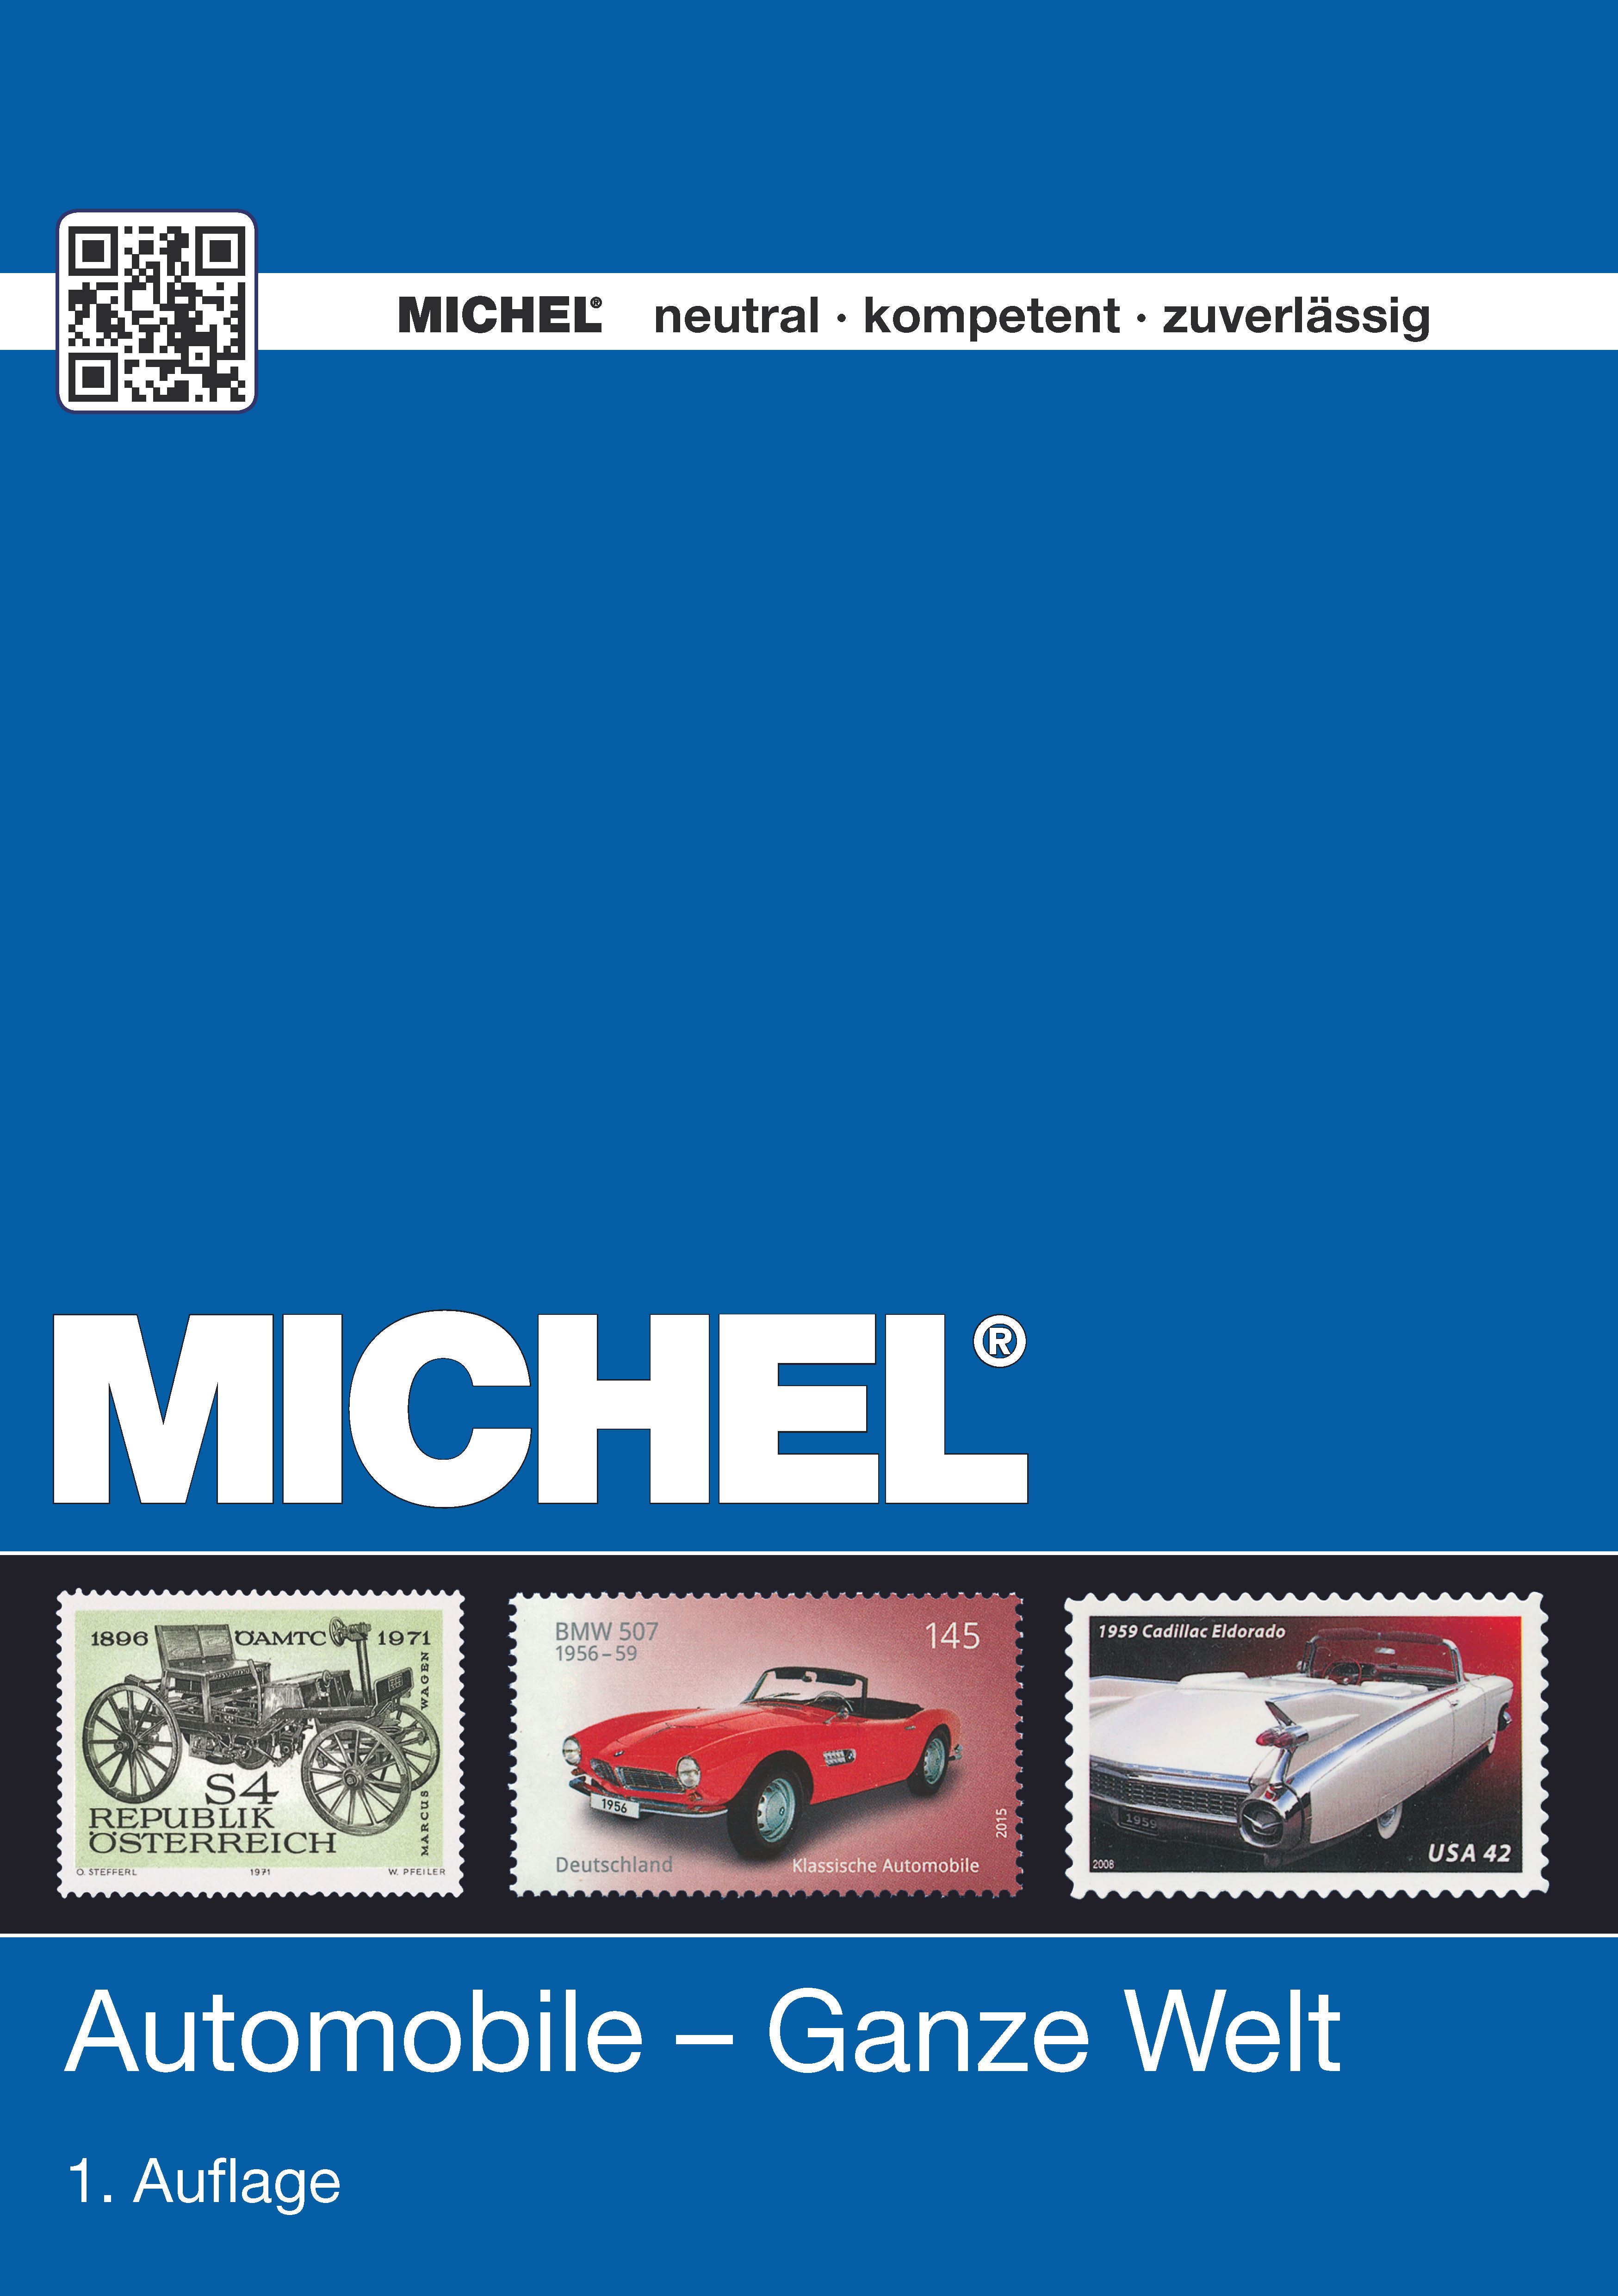 Auta / Automobile - 2015 celý svět MICHEL katalog známek